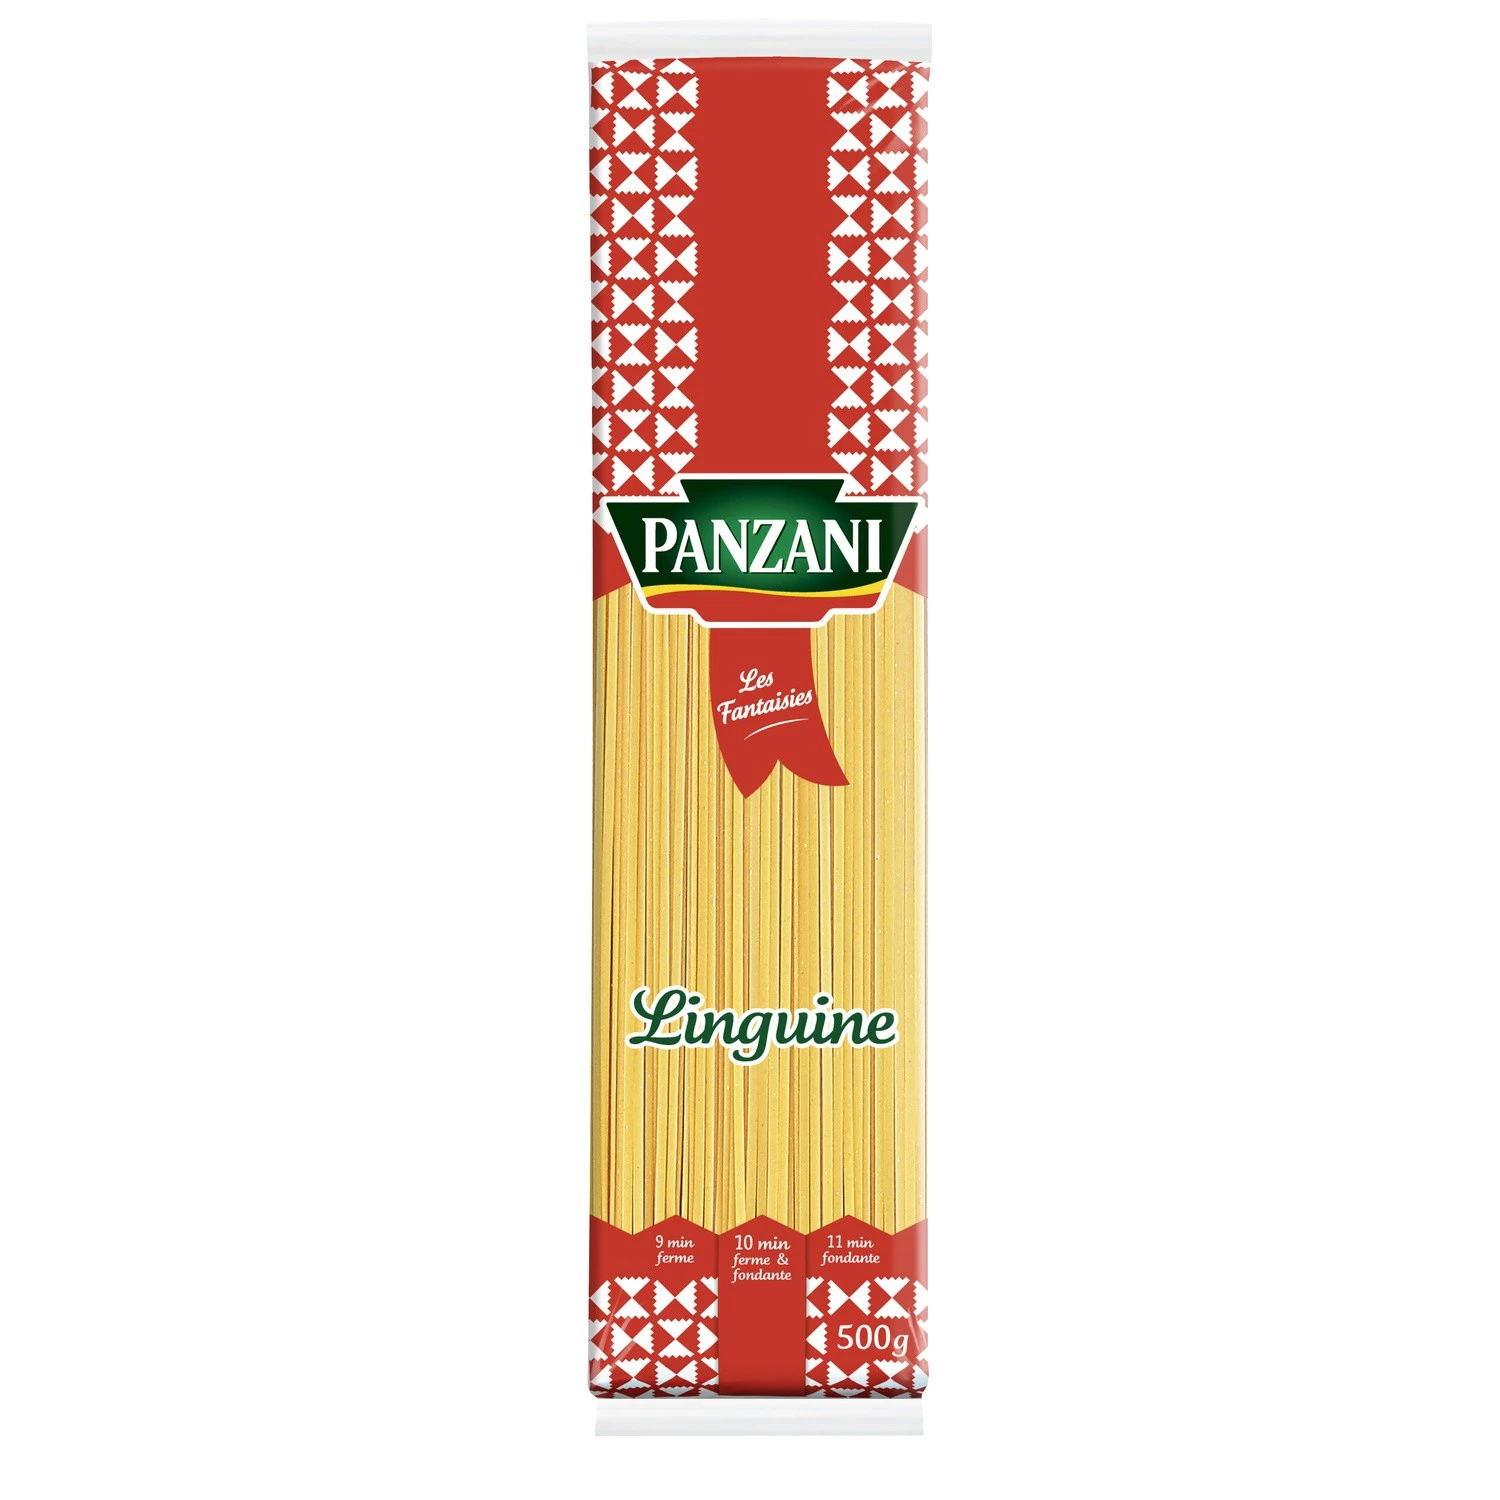 Linguine spaghetti pasta 500g - PANZANI